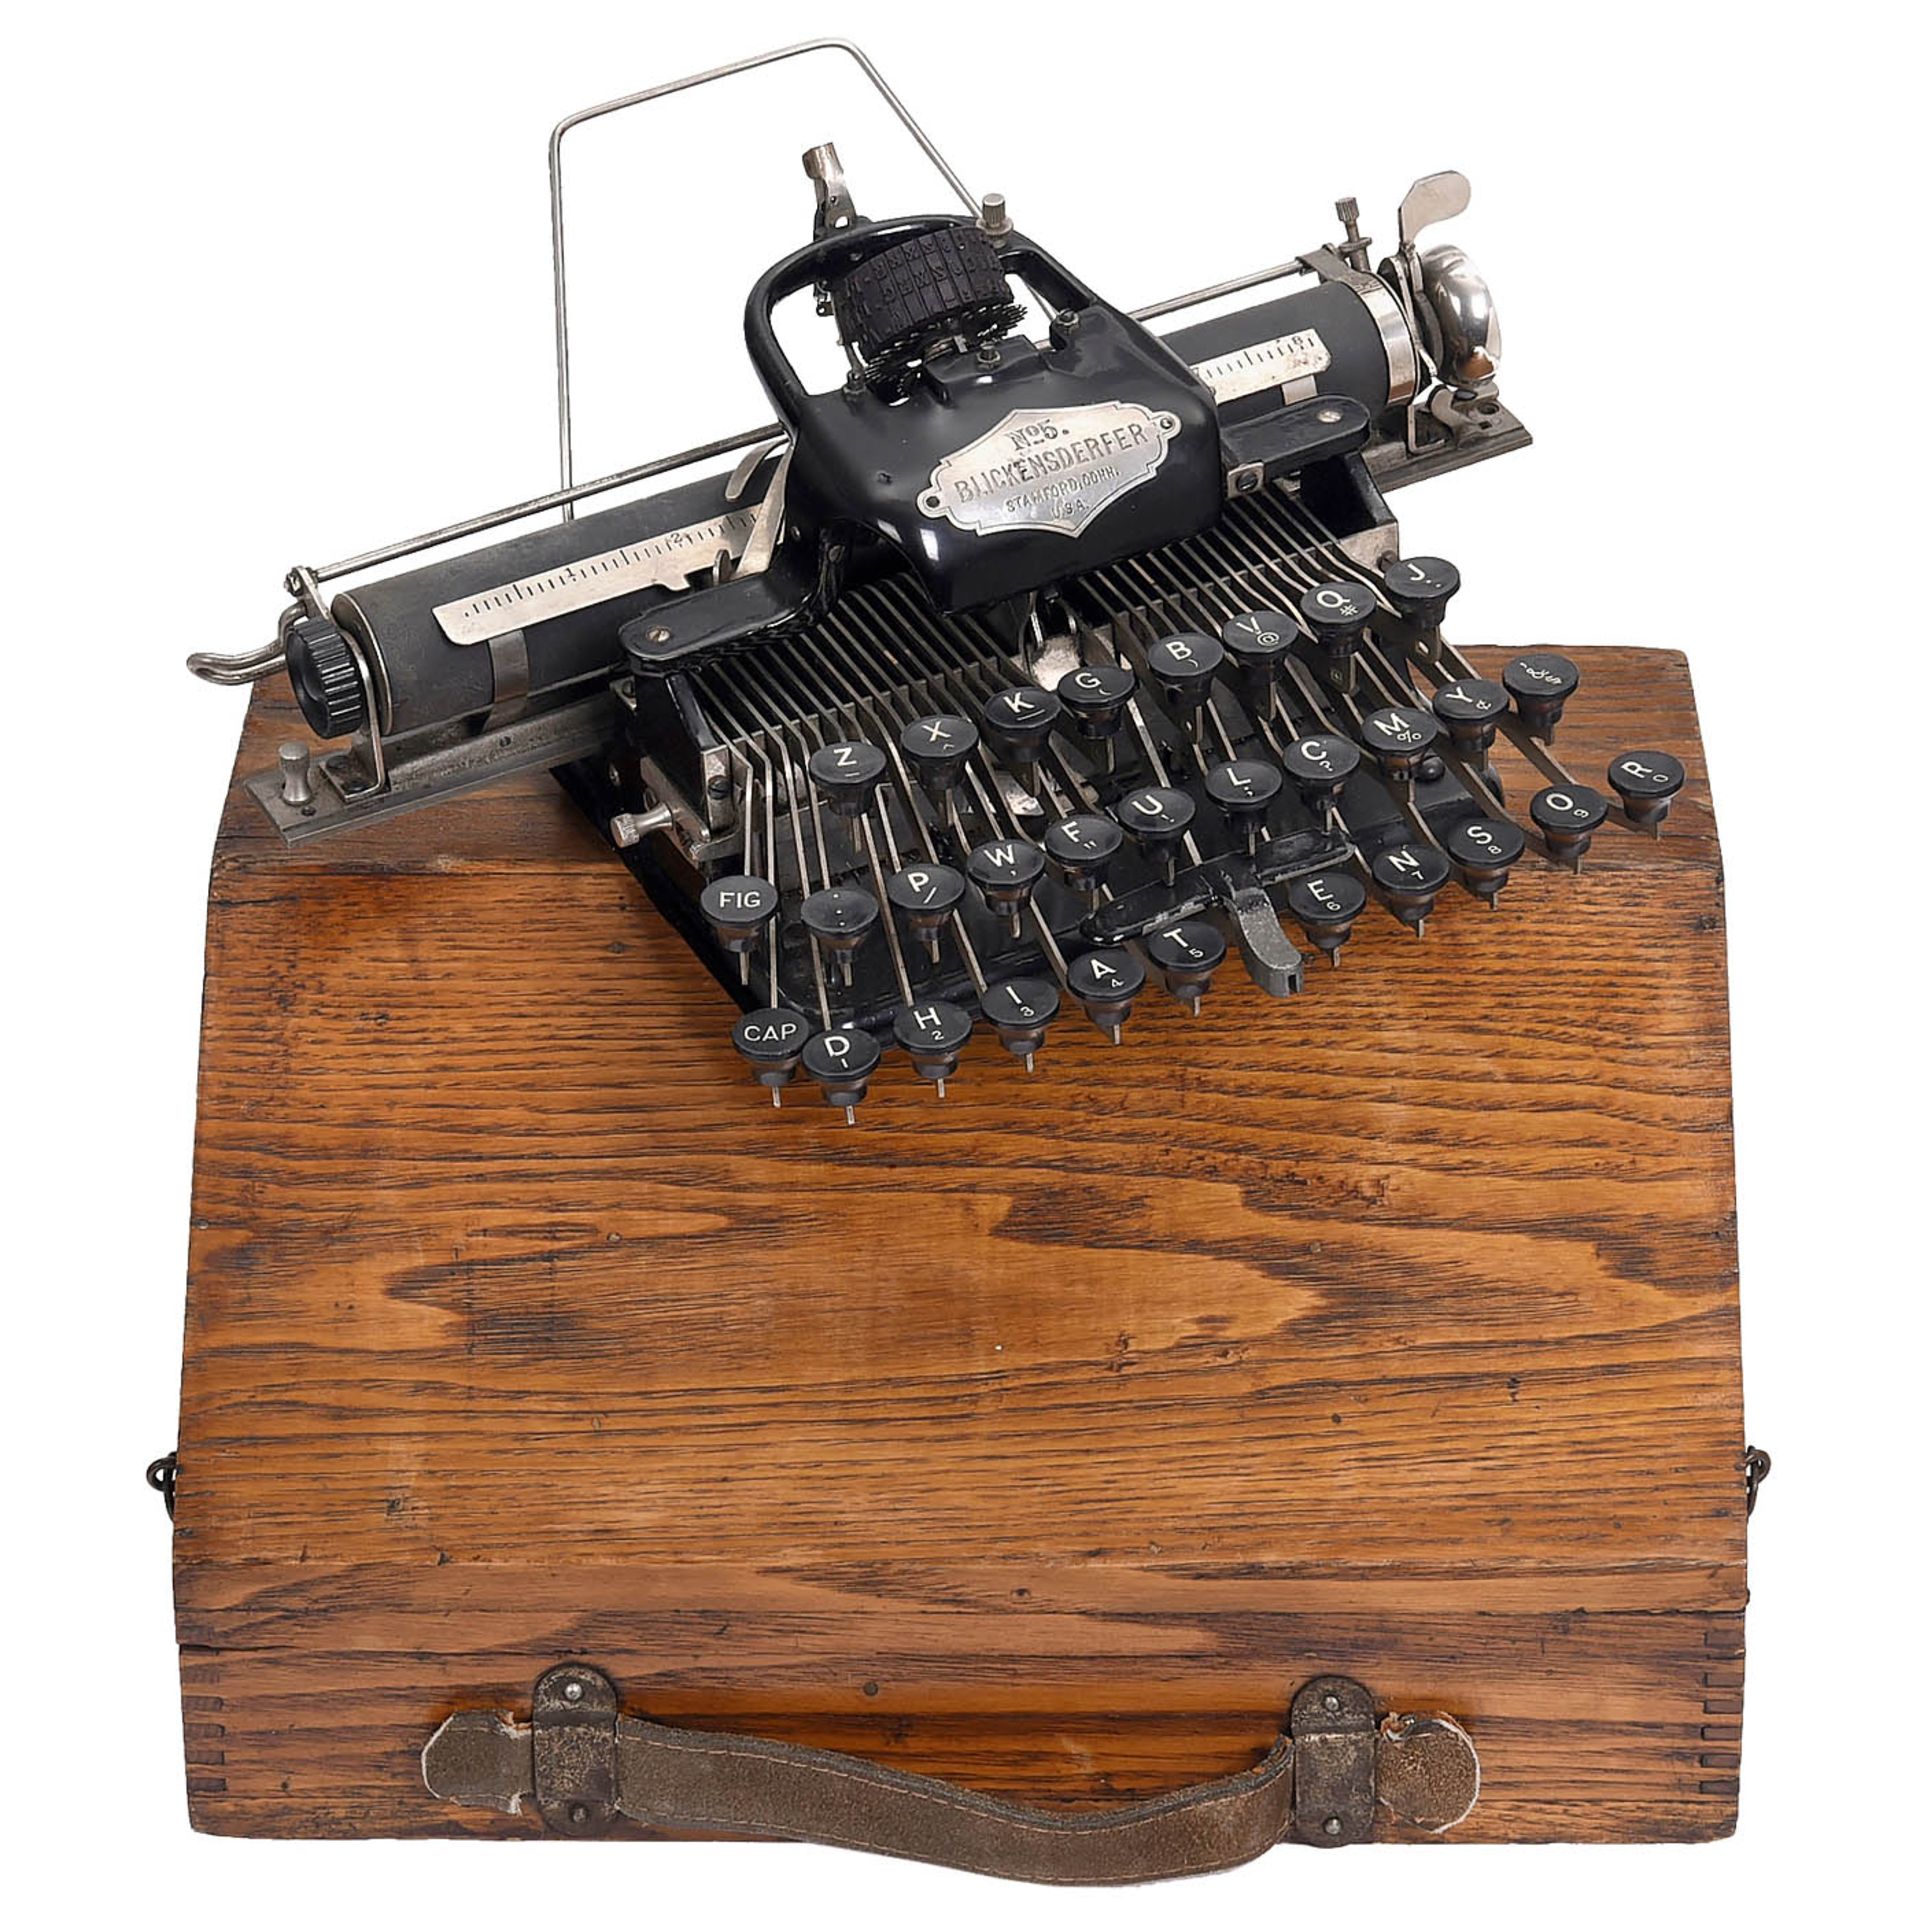 2 Blickensderfer Typewriters - Image 3 of 3